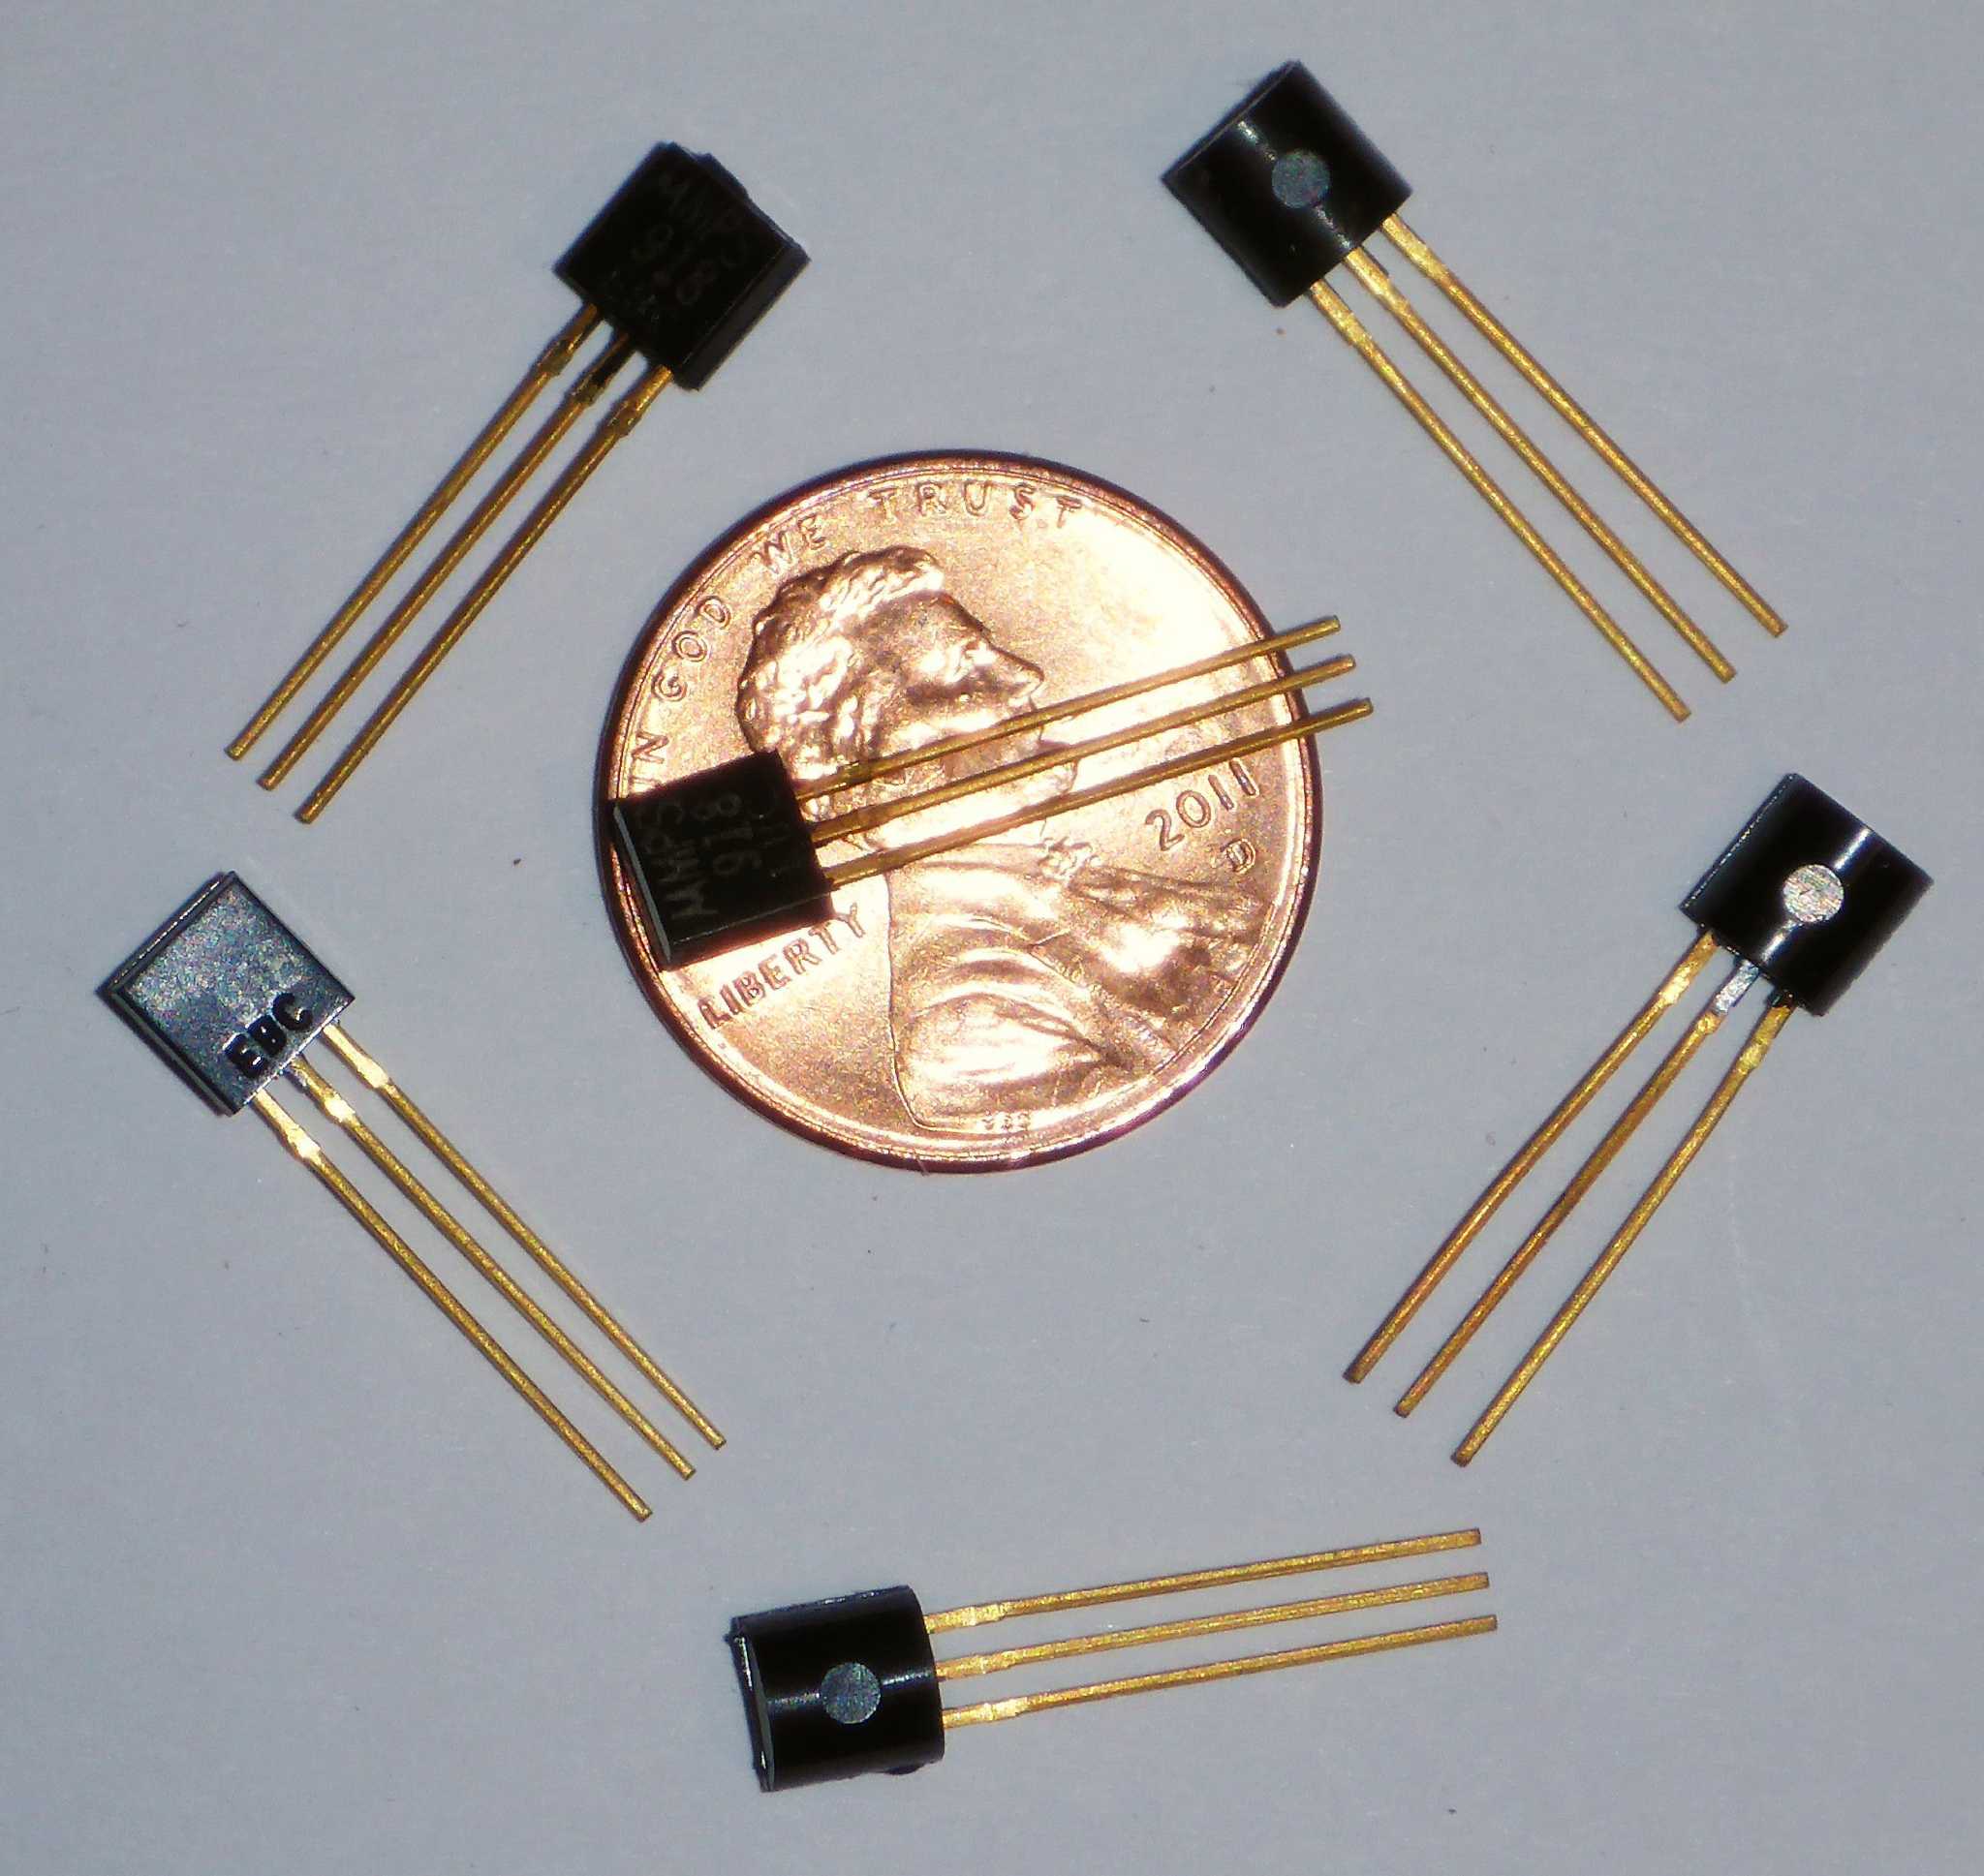 Evolution of transistors keeps us connected - San Antonio Express-News